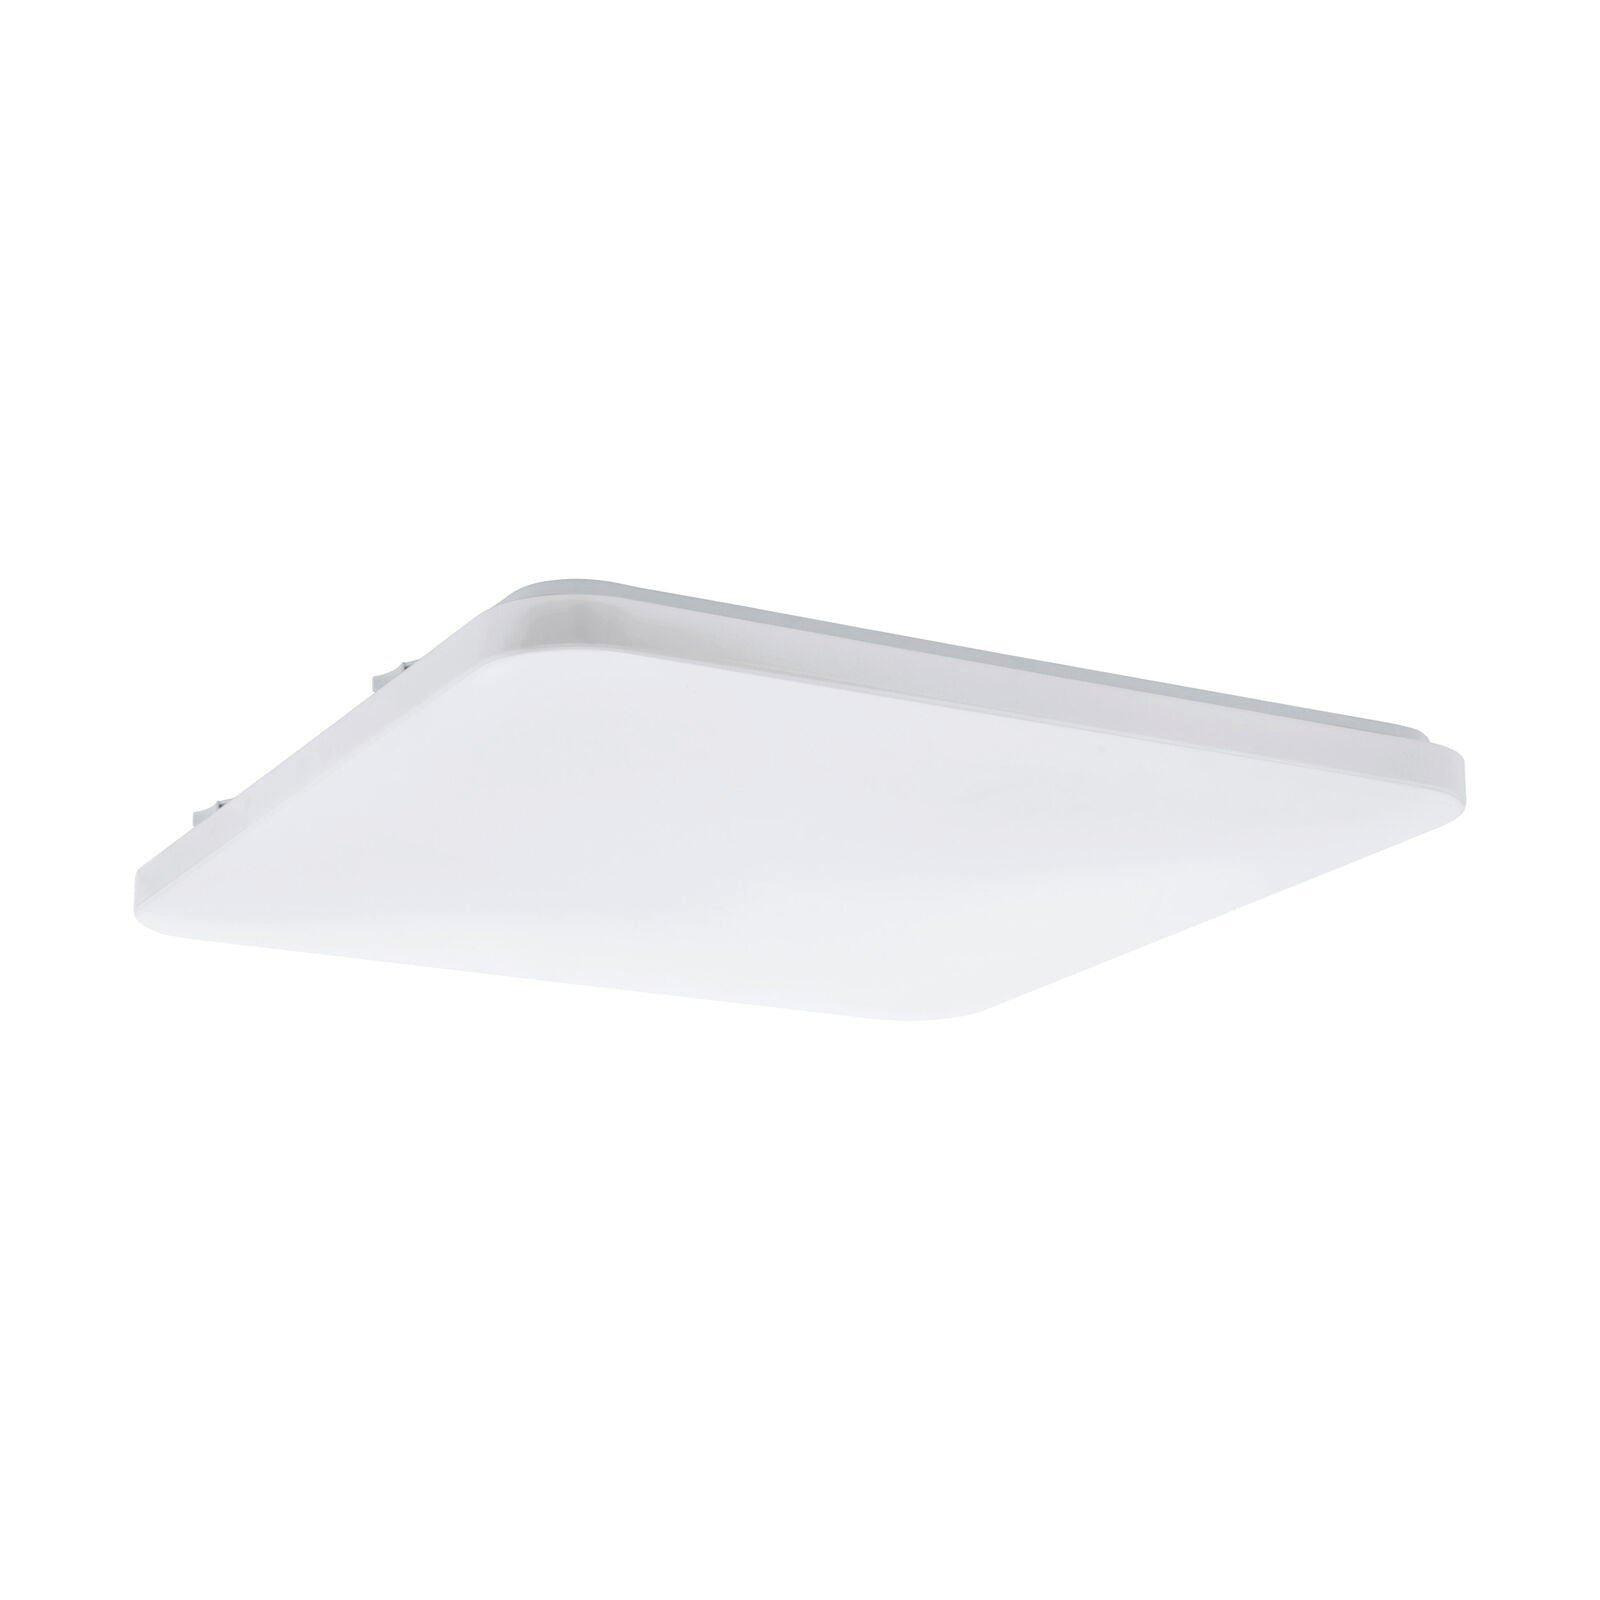 Wall Flush Ceiling Light Colour White Shade White Plastic Bulb LED 49.5W - image 1